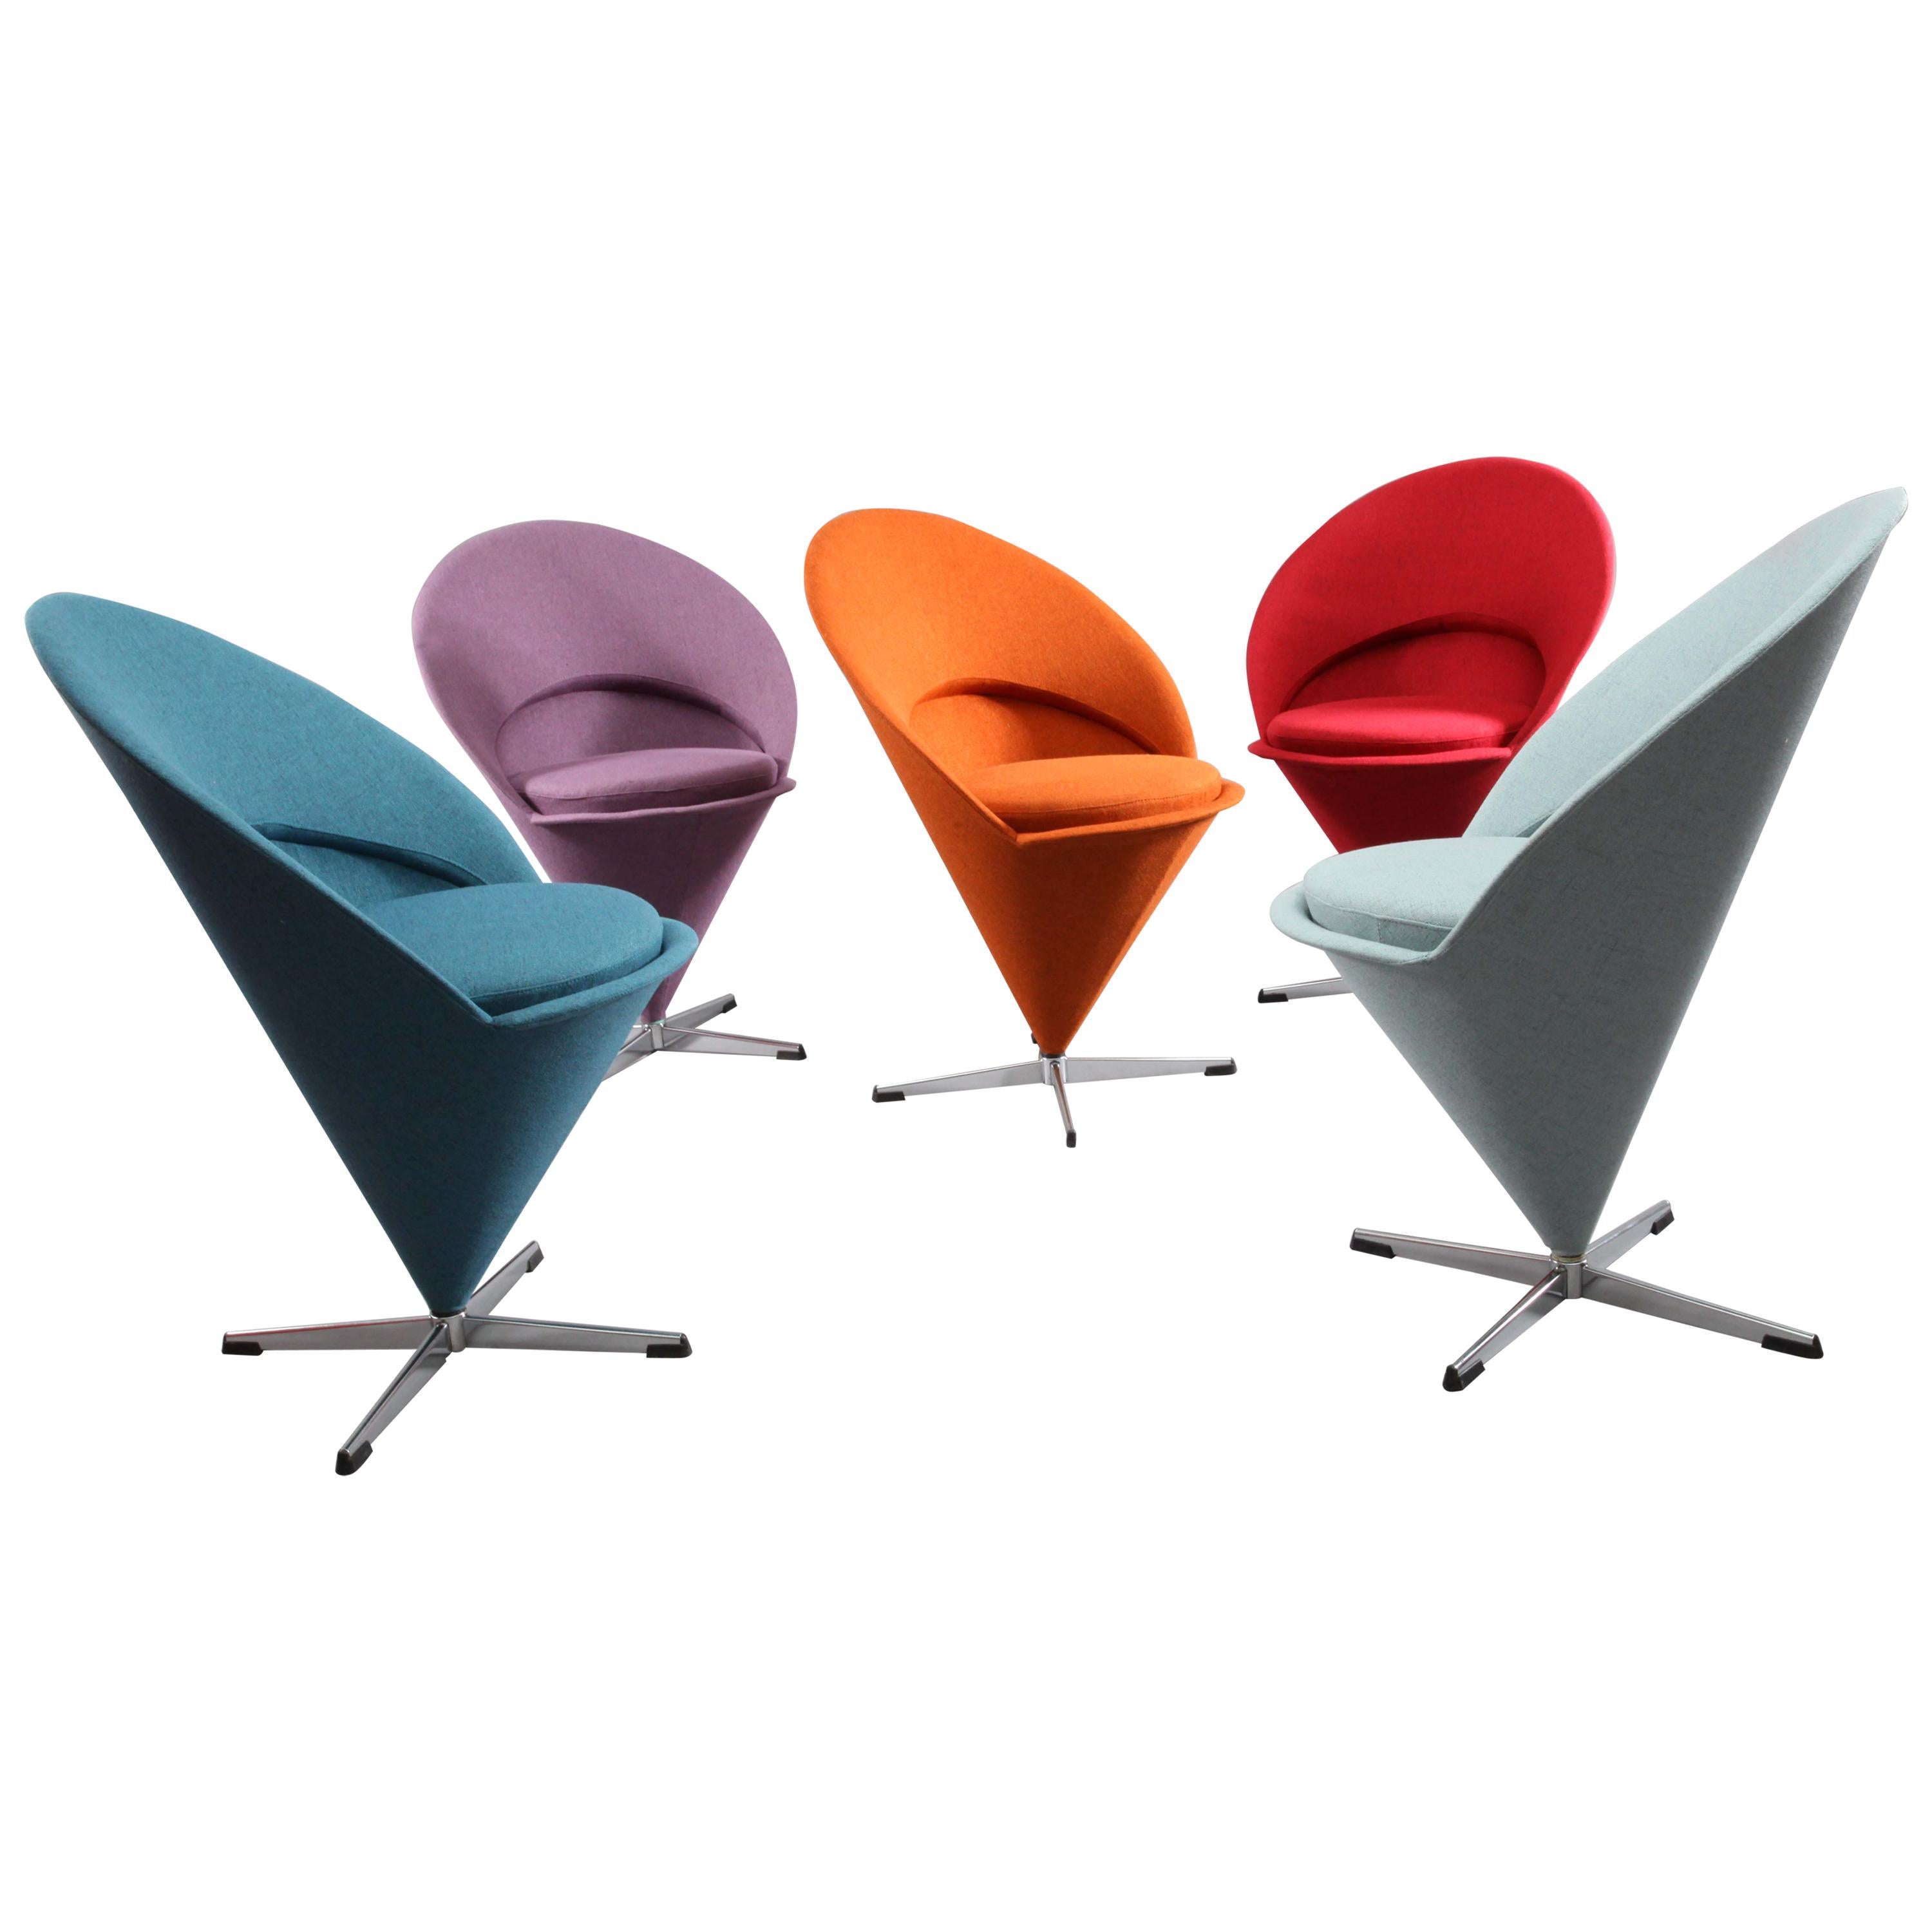 Five Original Cone Chairs Designed Verner Panton for Rosenthal 1958, Denmark